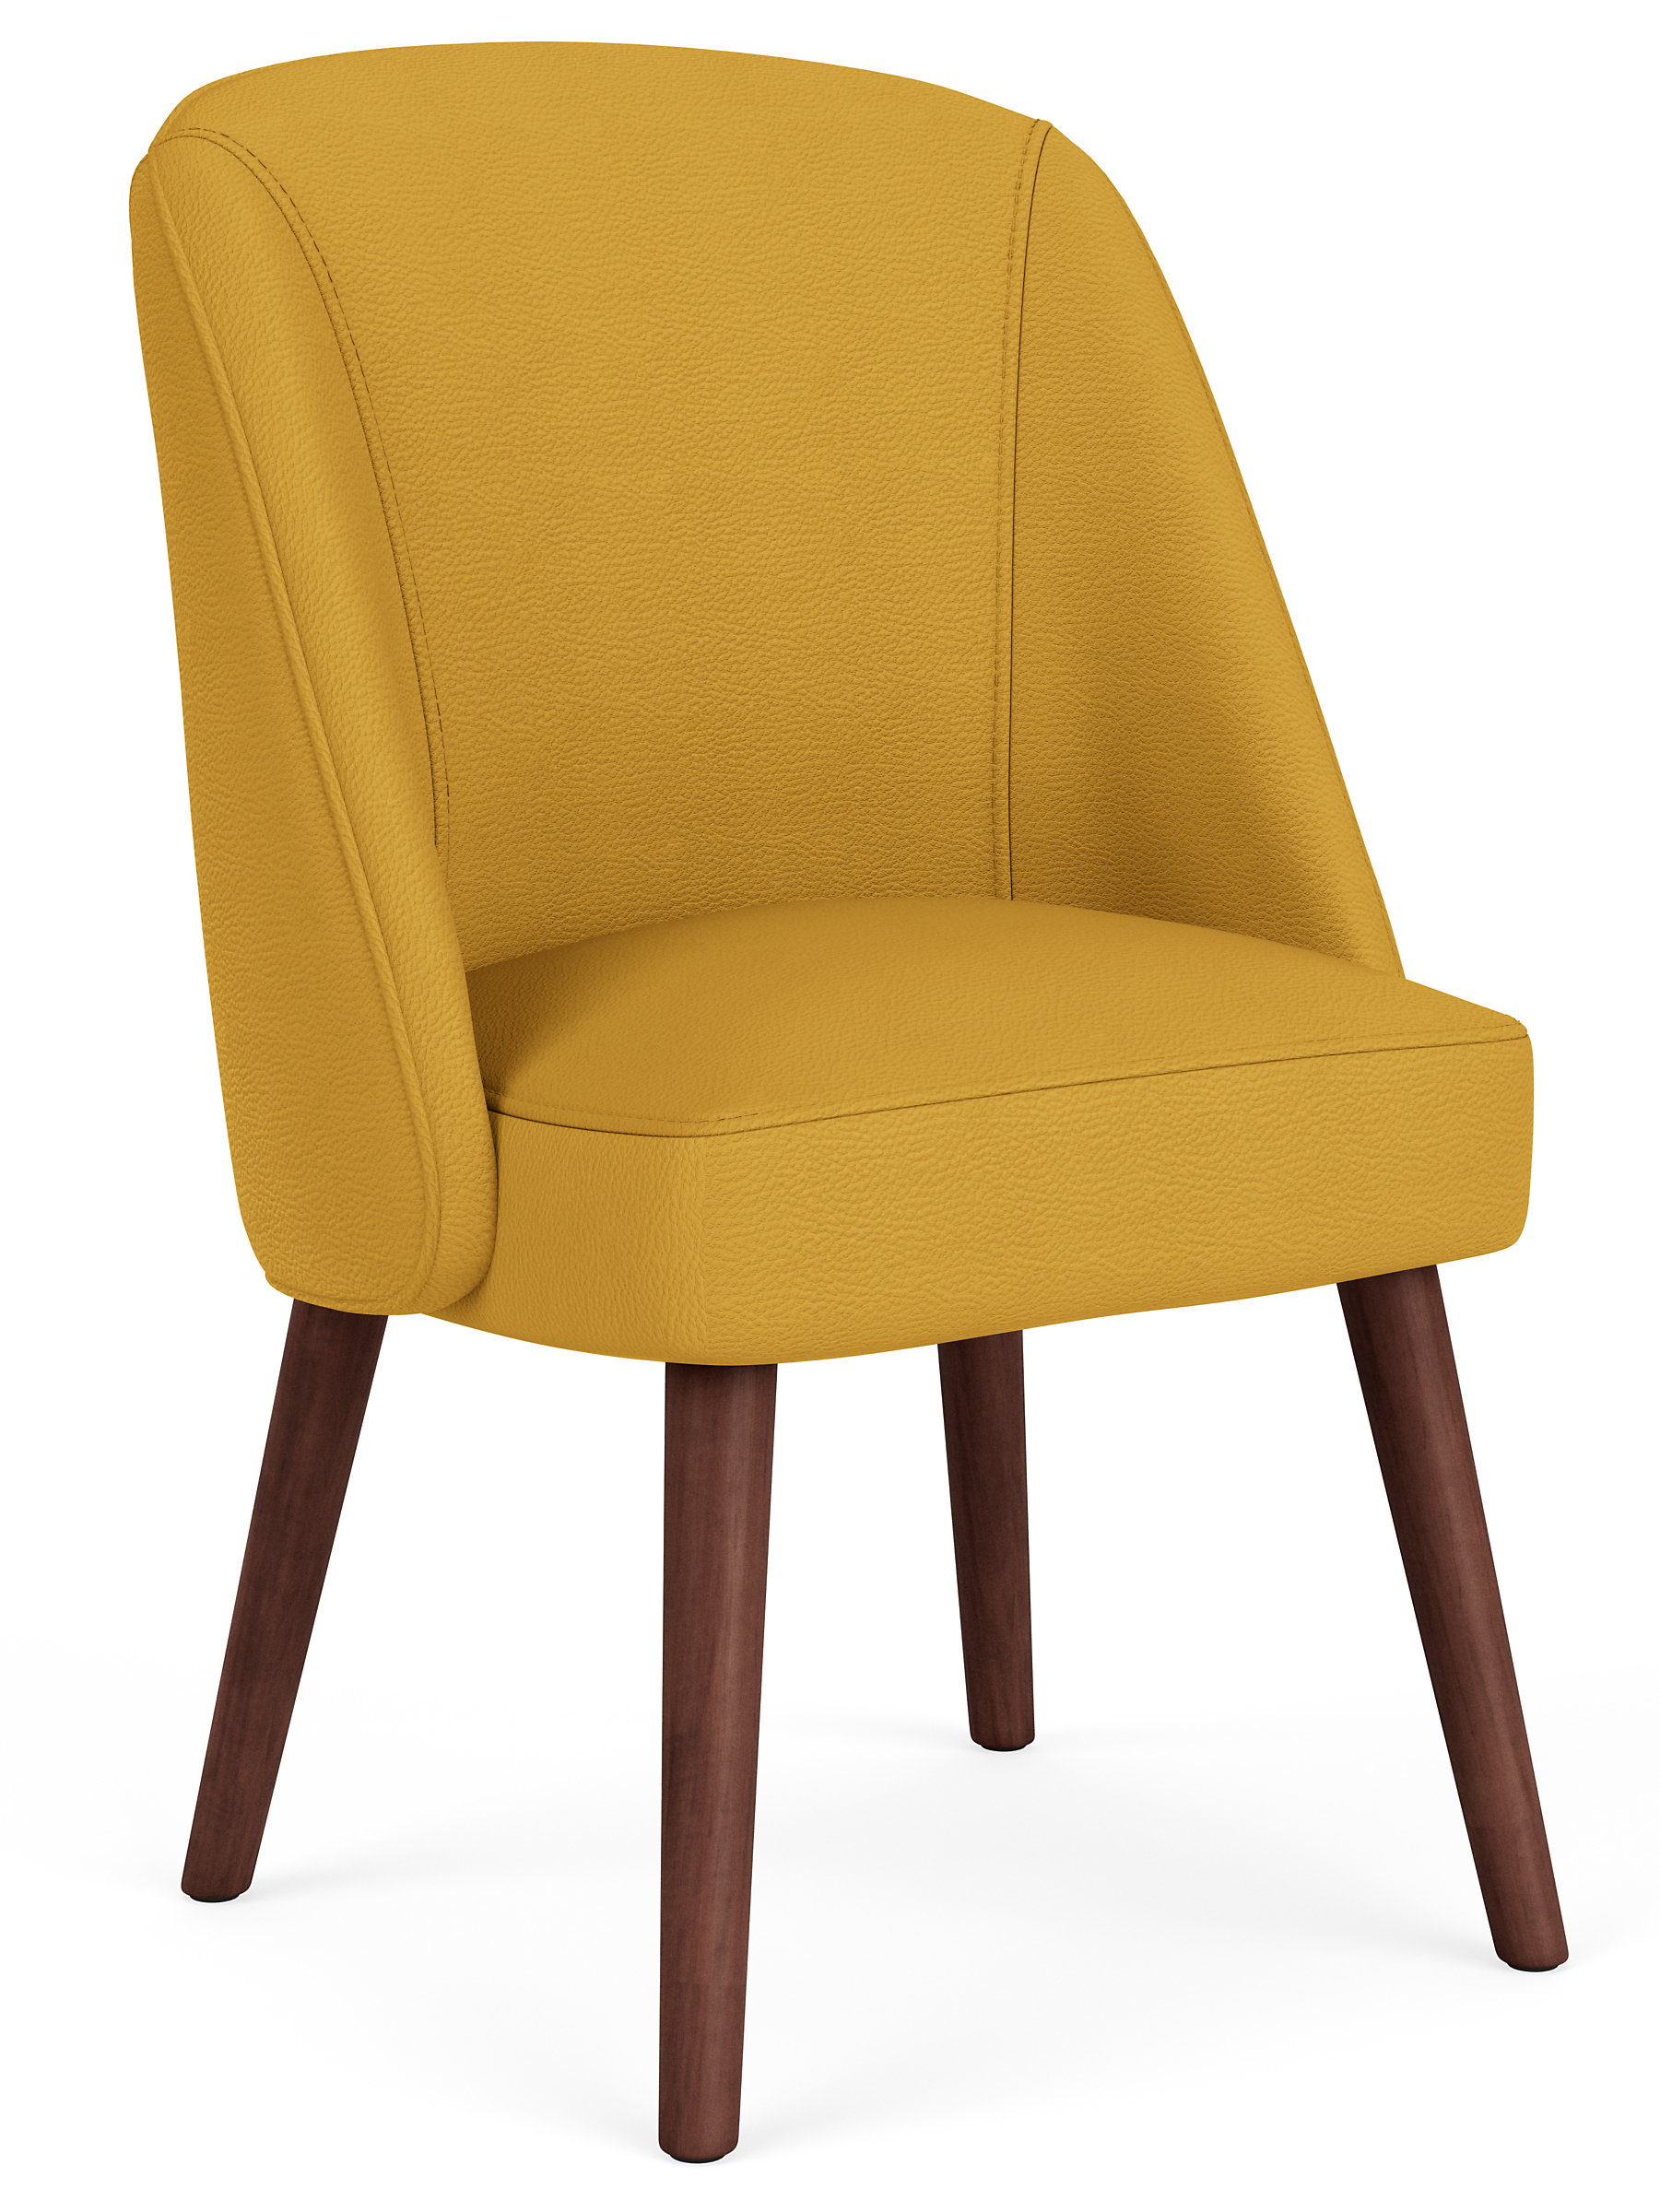 Cora Side Chair in Urbino Saffron Leather with Cognac Legs